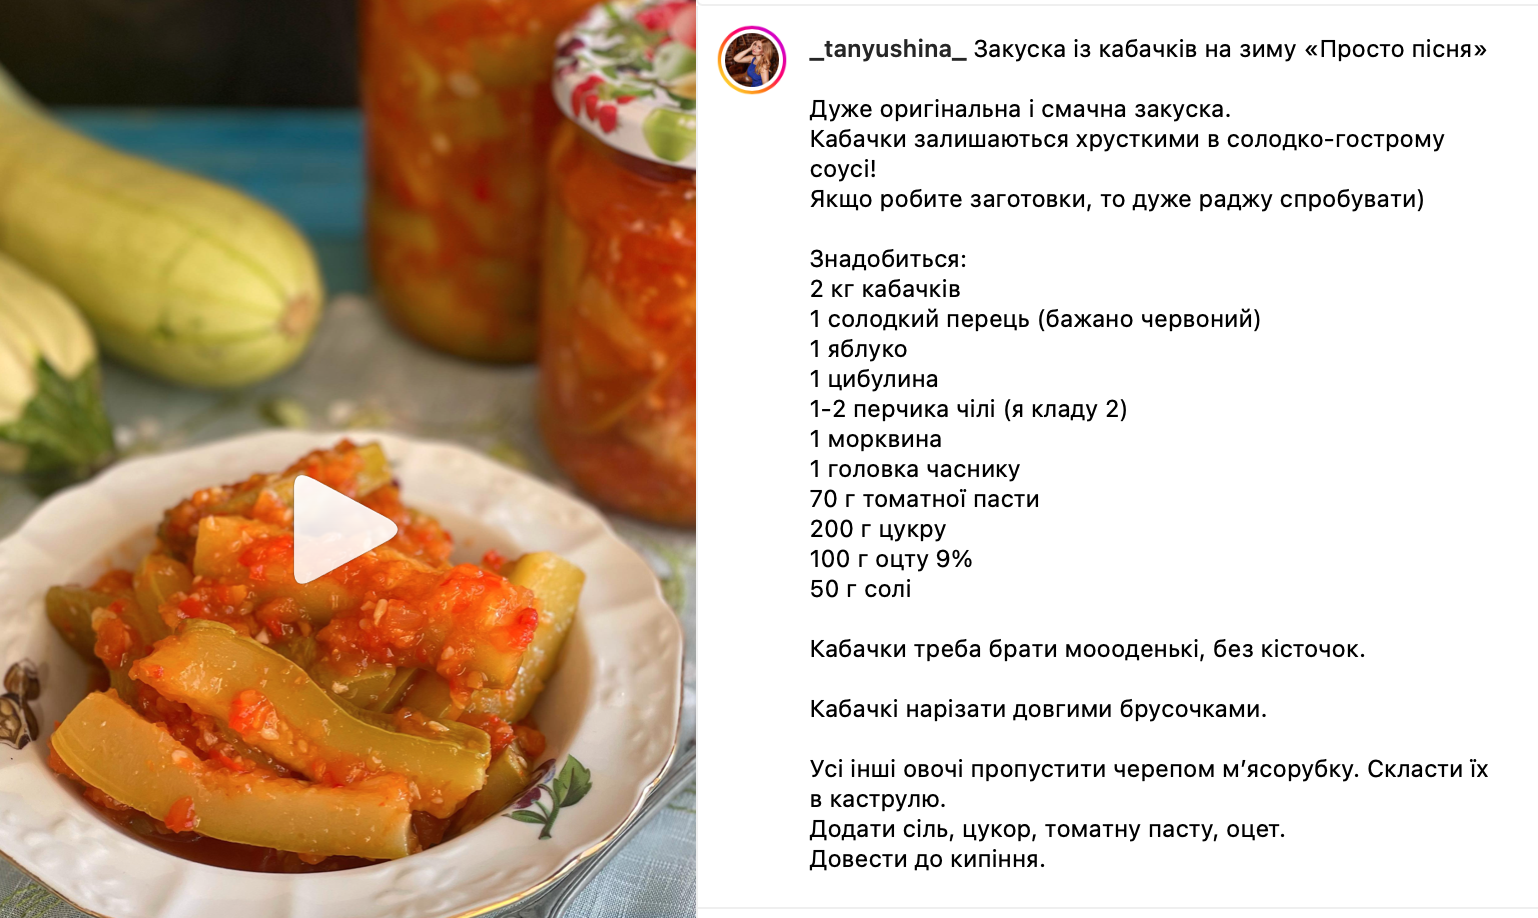 Recipe for zucchini in sauce